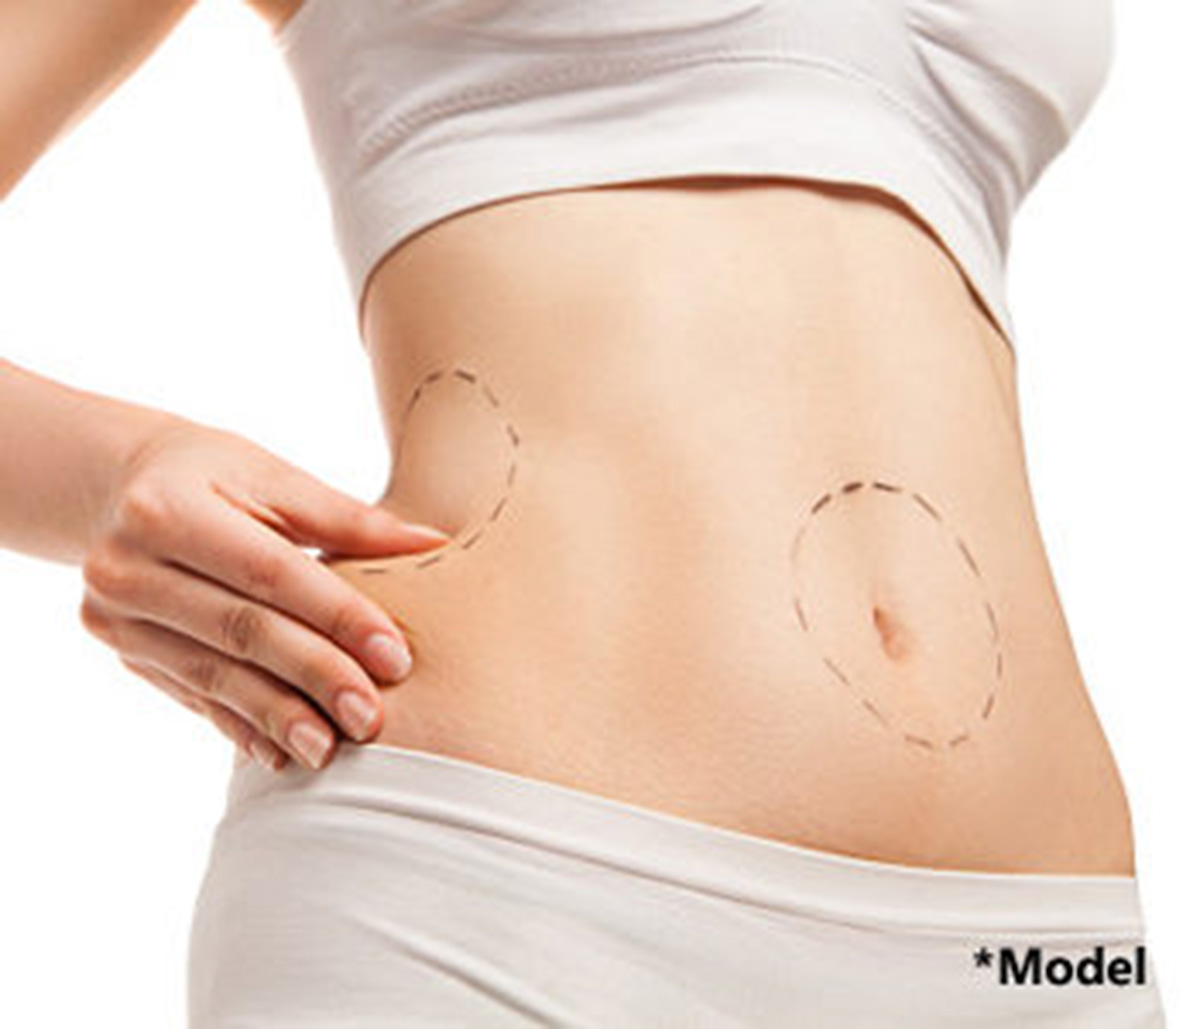 https://www.dassmd.com/wp-content/uploads/2019/05/Tummy-tuck-is-a-versatile-plastic-surgery-procedure-to-restore-slim-contours.jpg